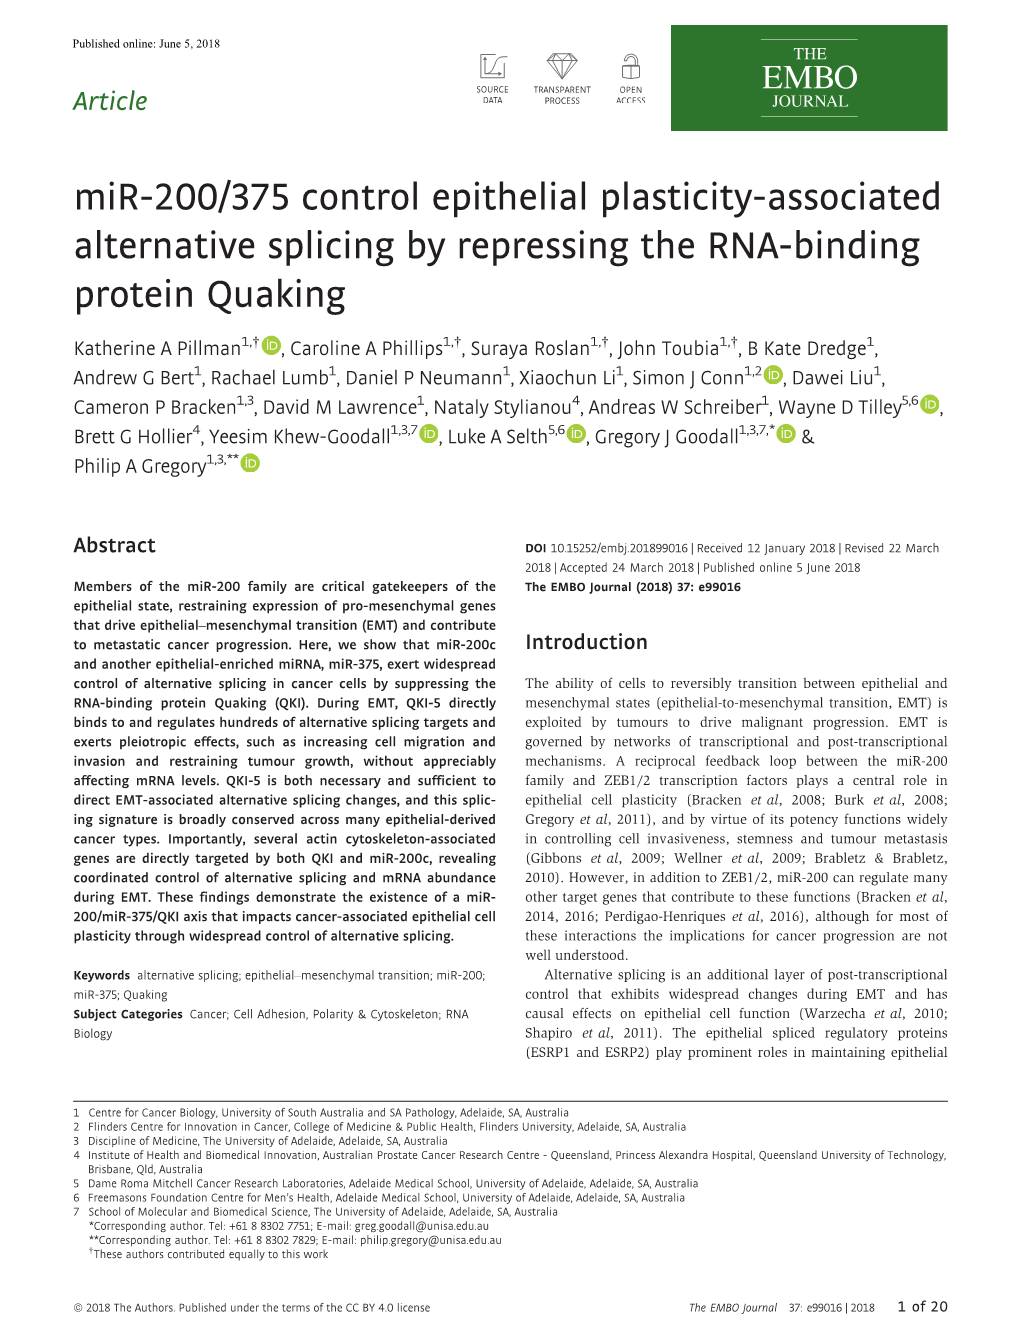 Mir‐200/375 Control Epithelial Plasticity‐Associated Alternative